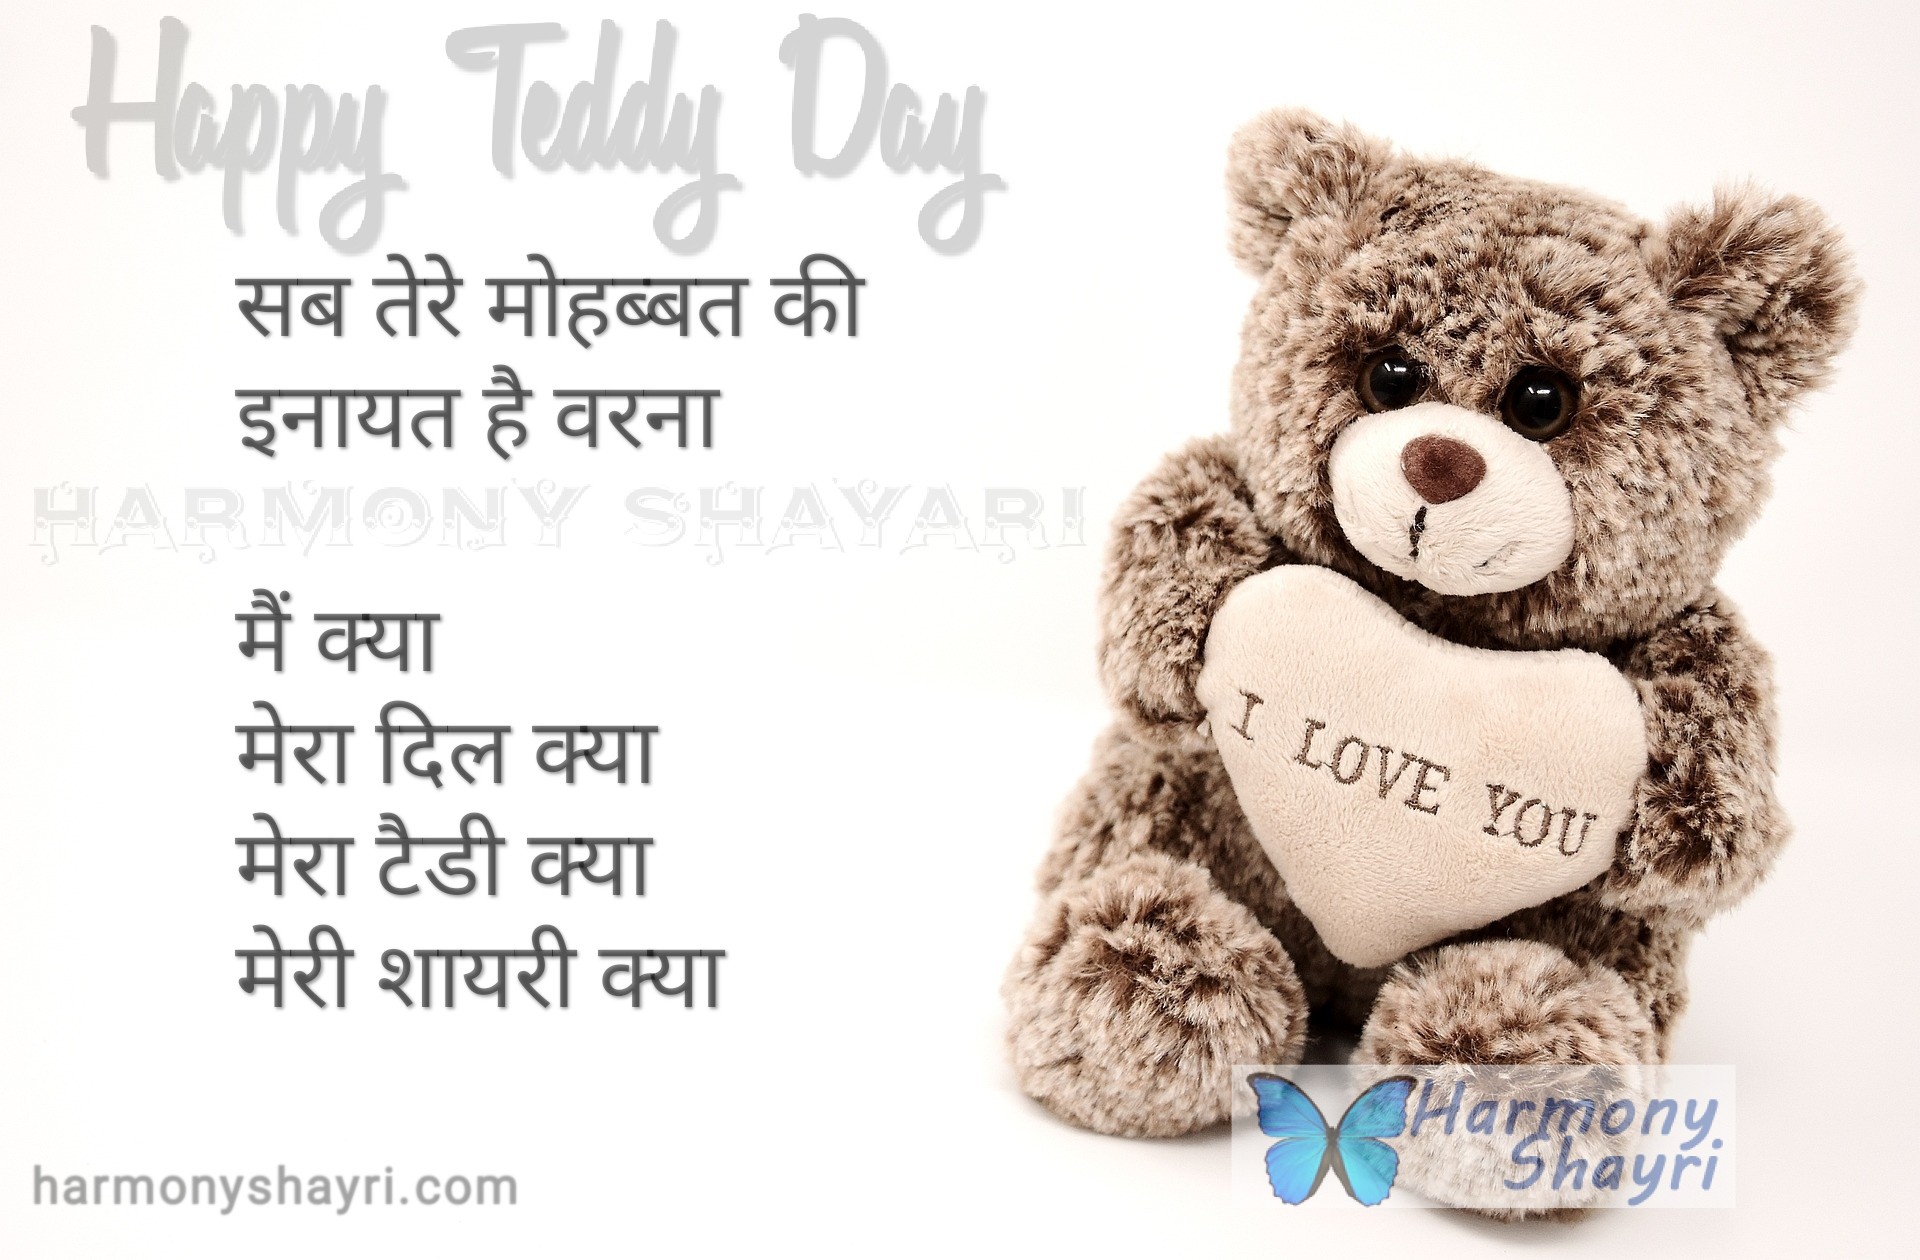 Sab tere mohabbat ki inaayat hai – Happy Teddy Day